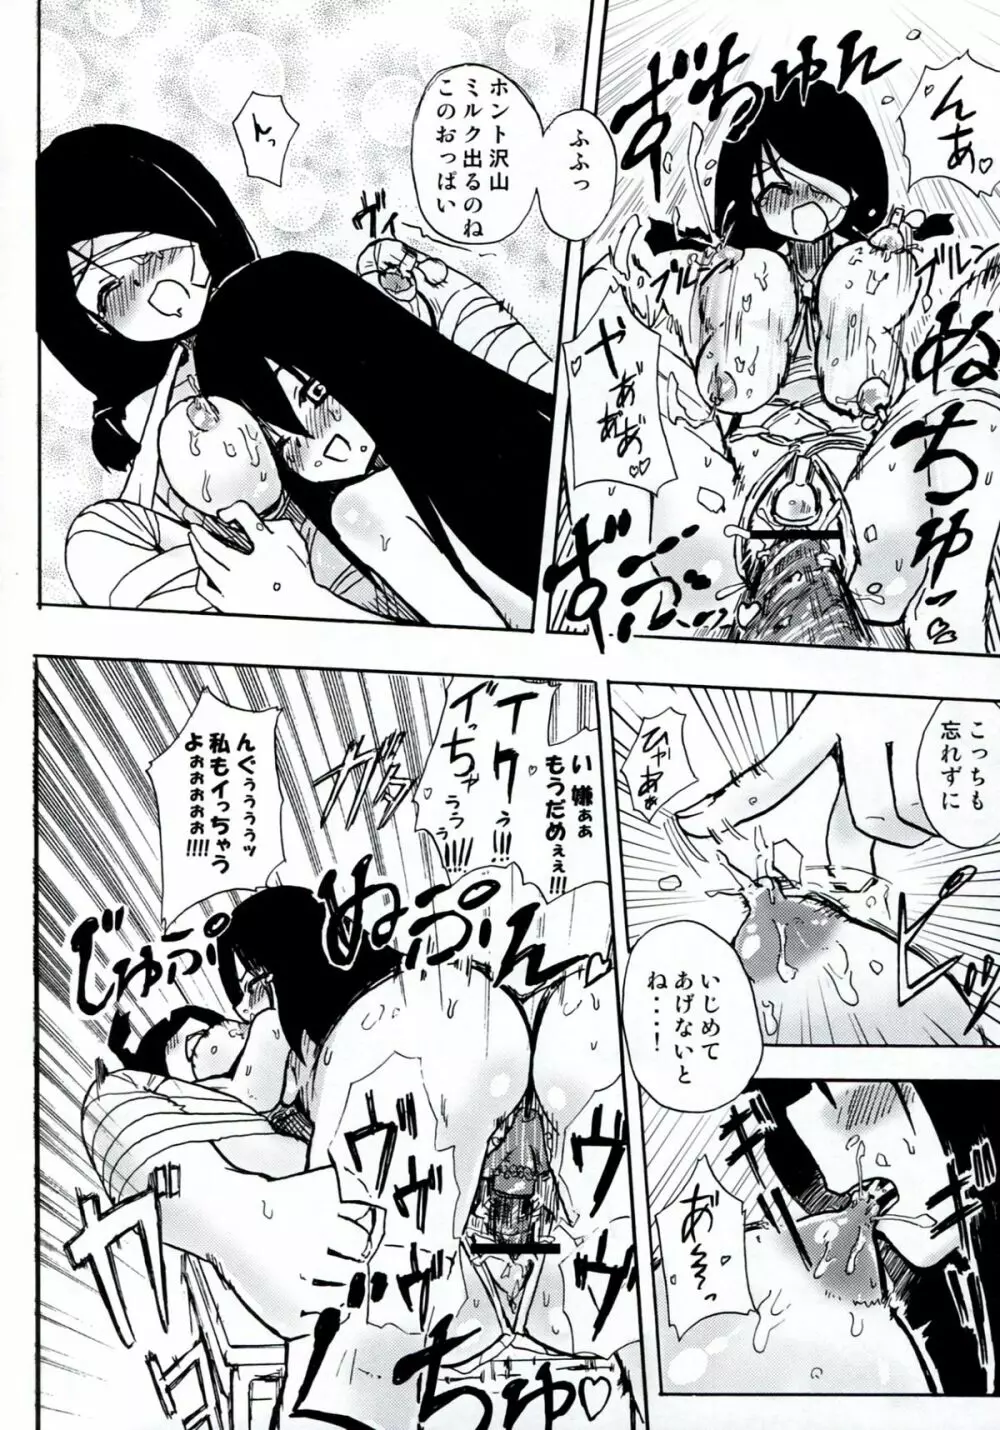 Homuraya Milk ★ Collection 2 - page94